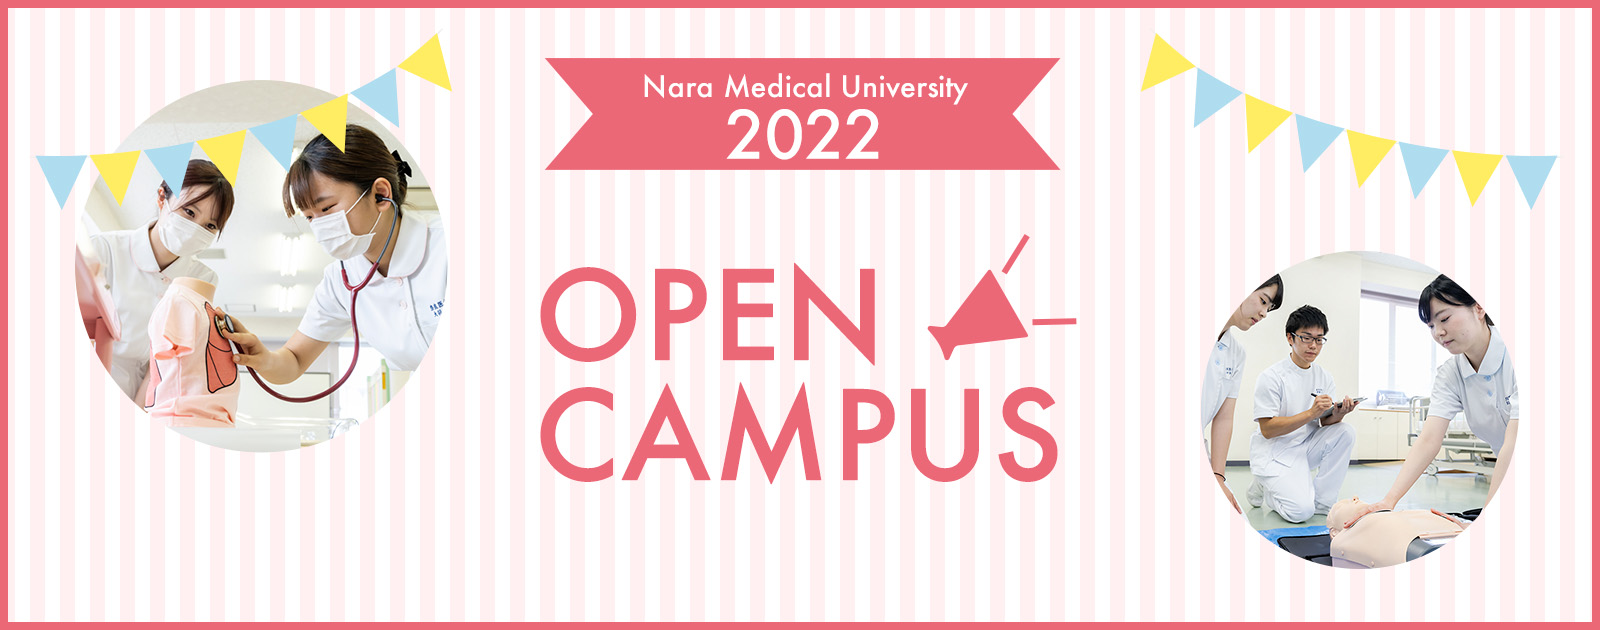 Nara Medical University2022 Open Campus